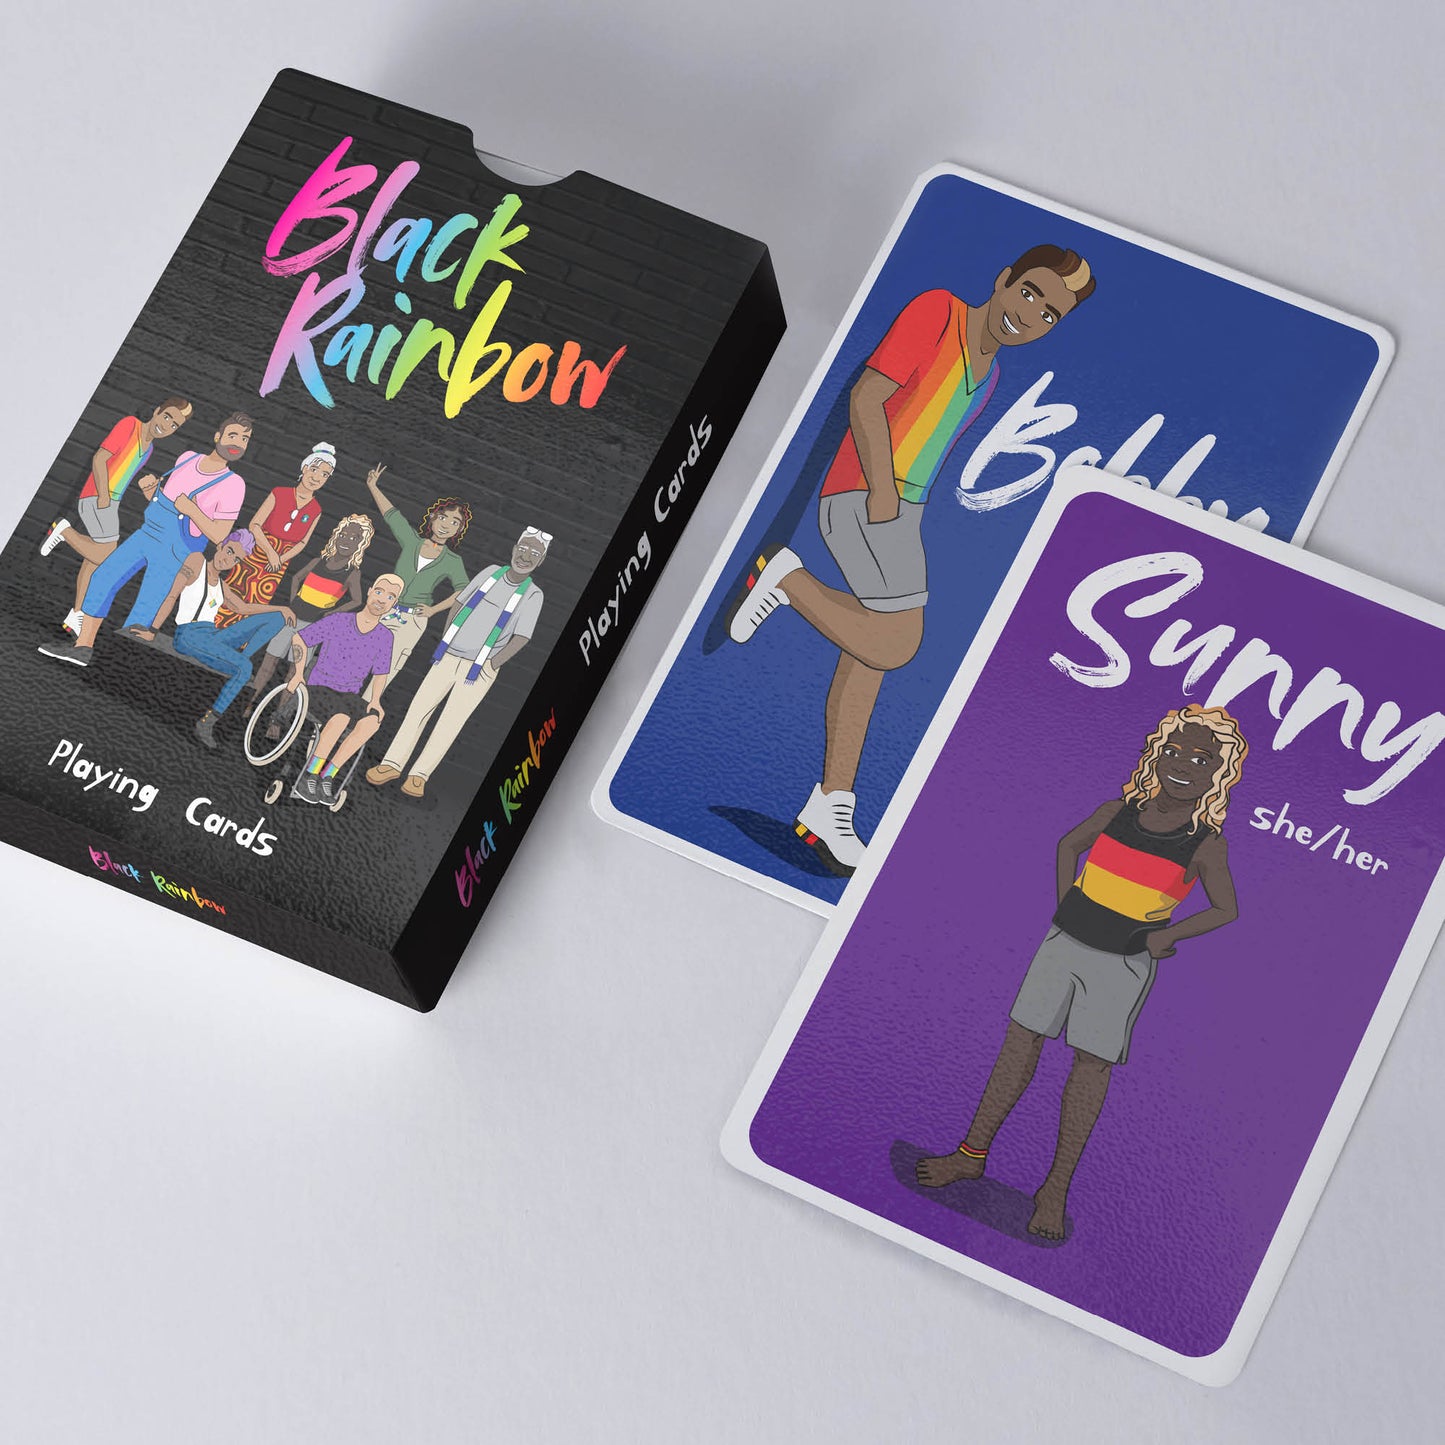 Black Rainbow's What is LGBTIQA+SB? Tea Towel + Playing Cards Bundle